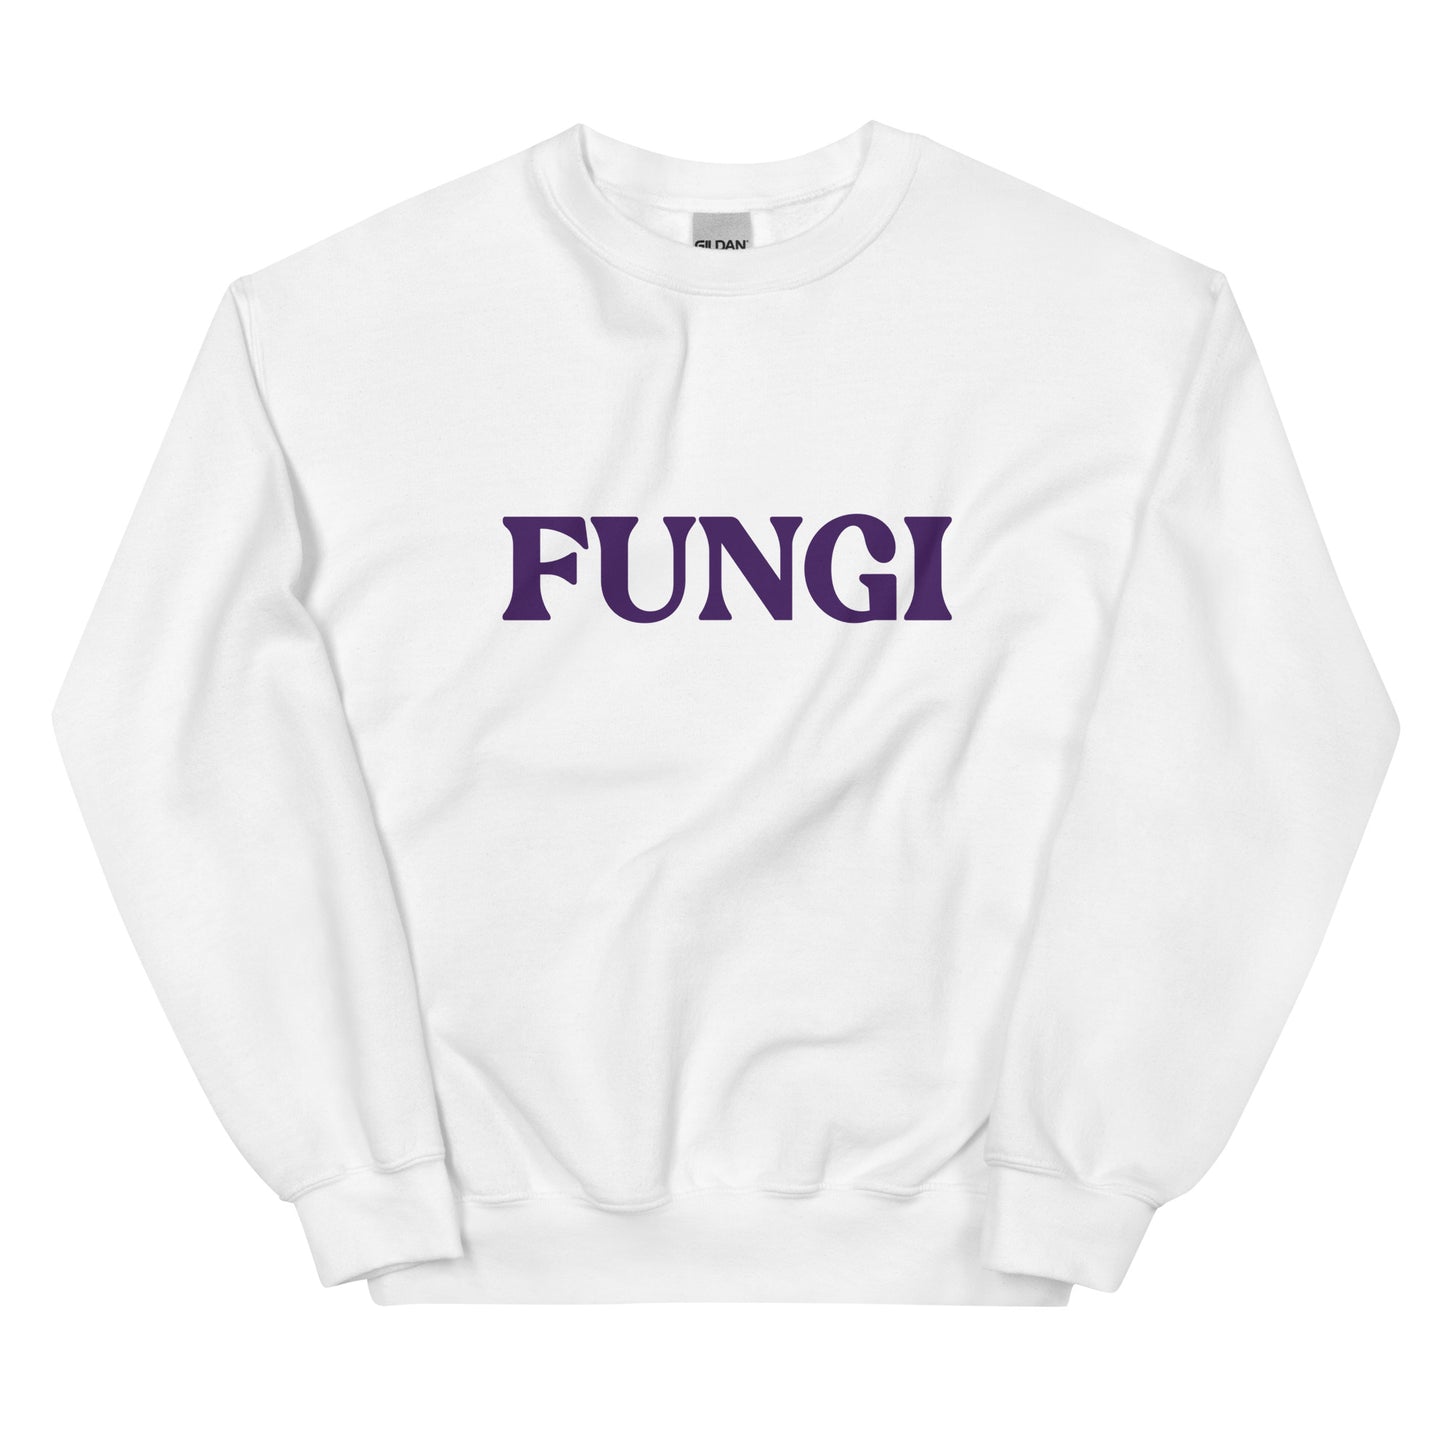 Fun Guy Graphic Unisex Sweatshirt